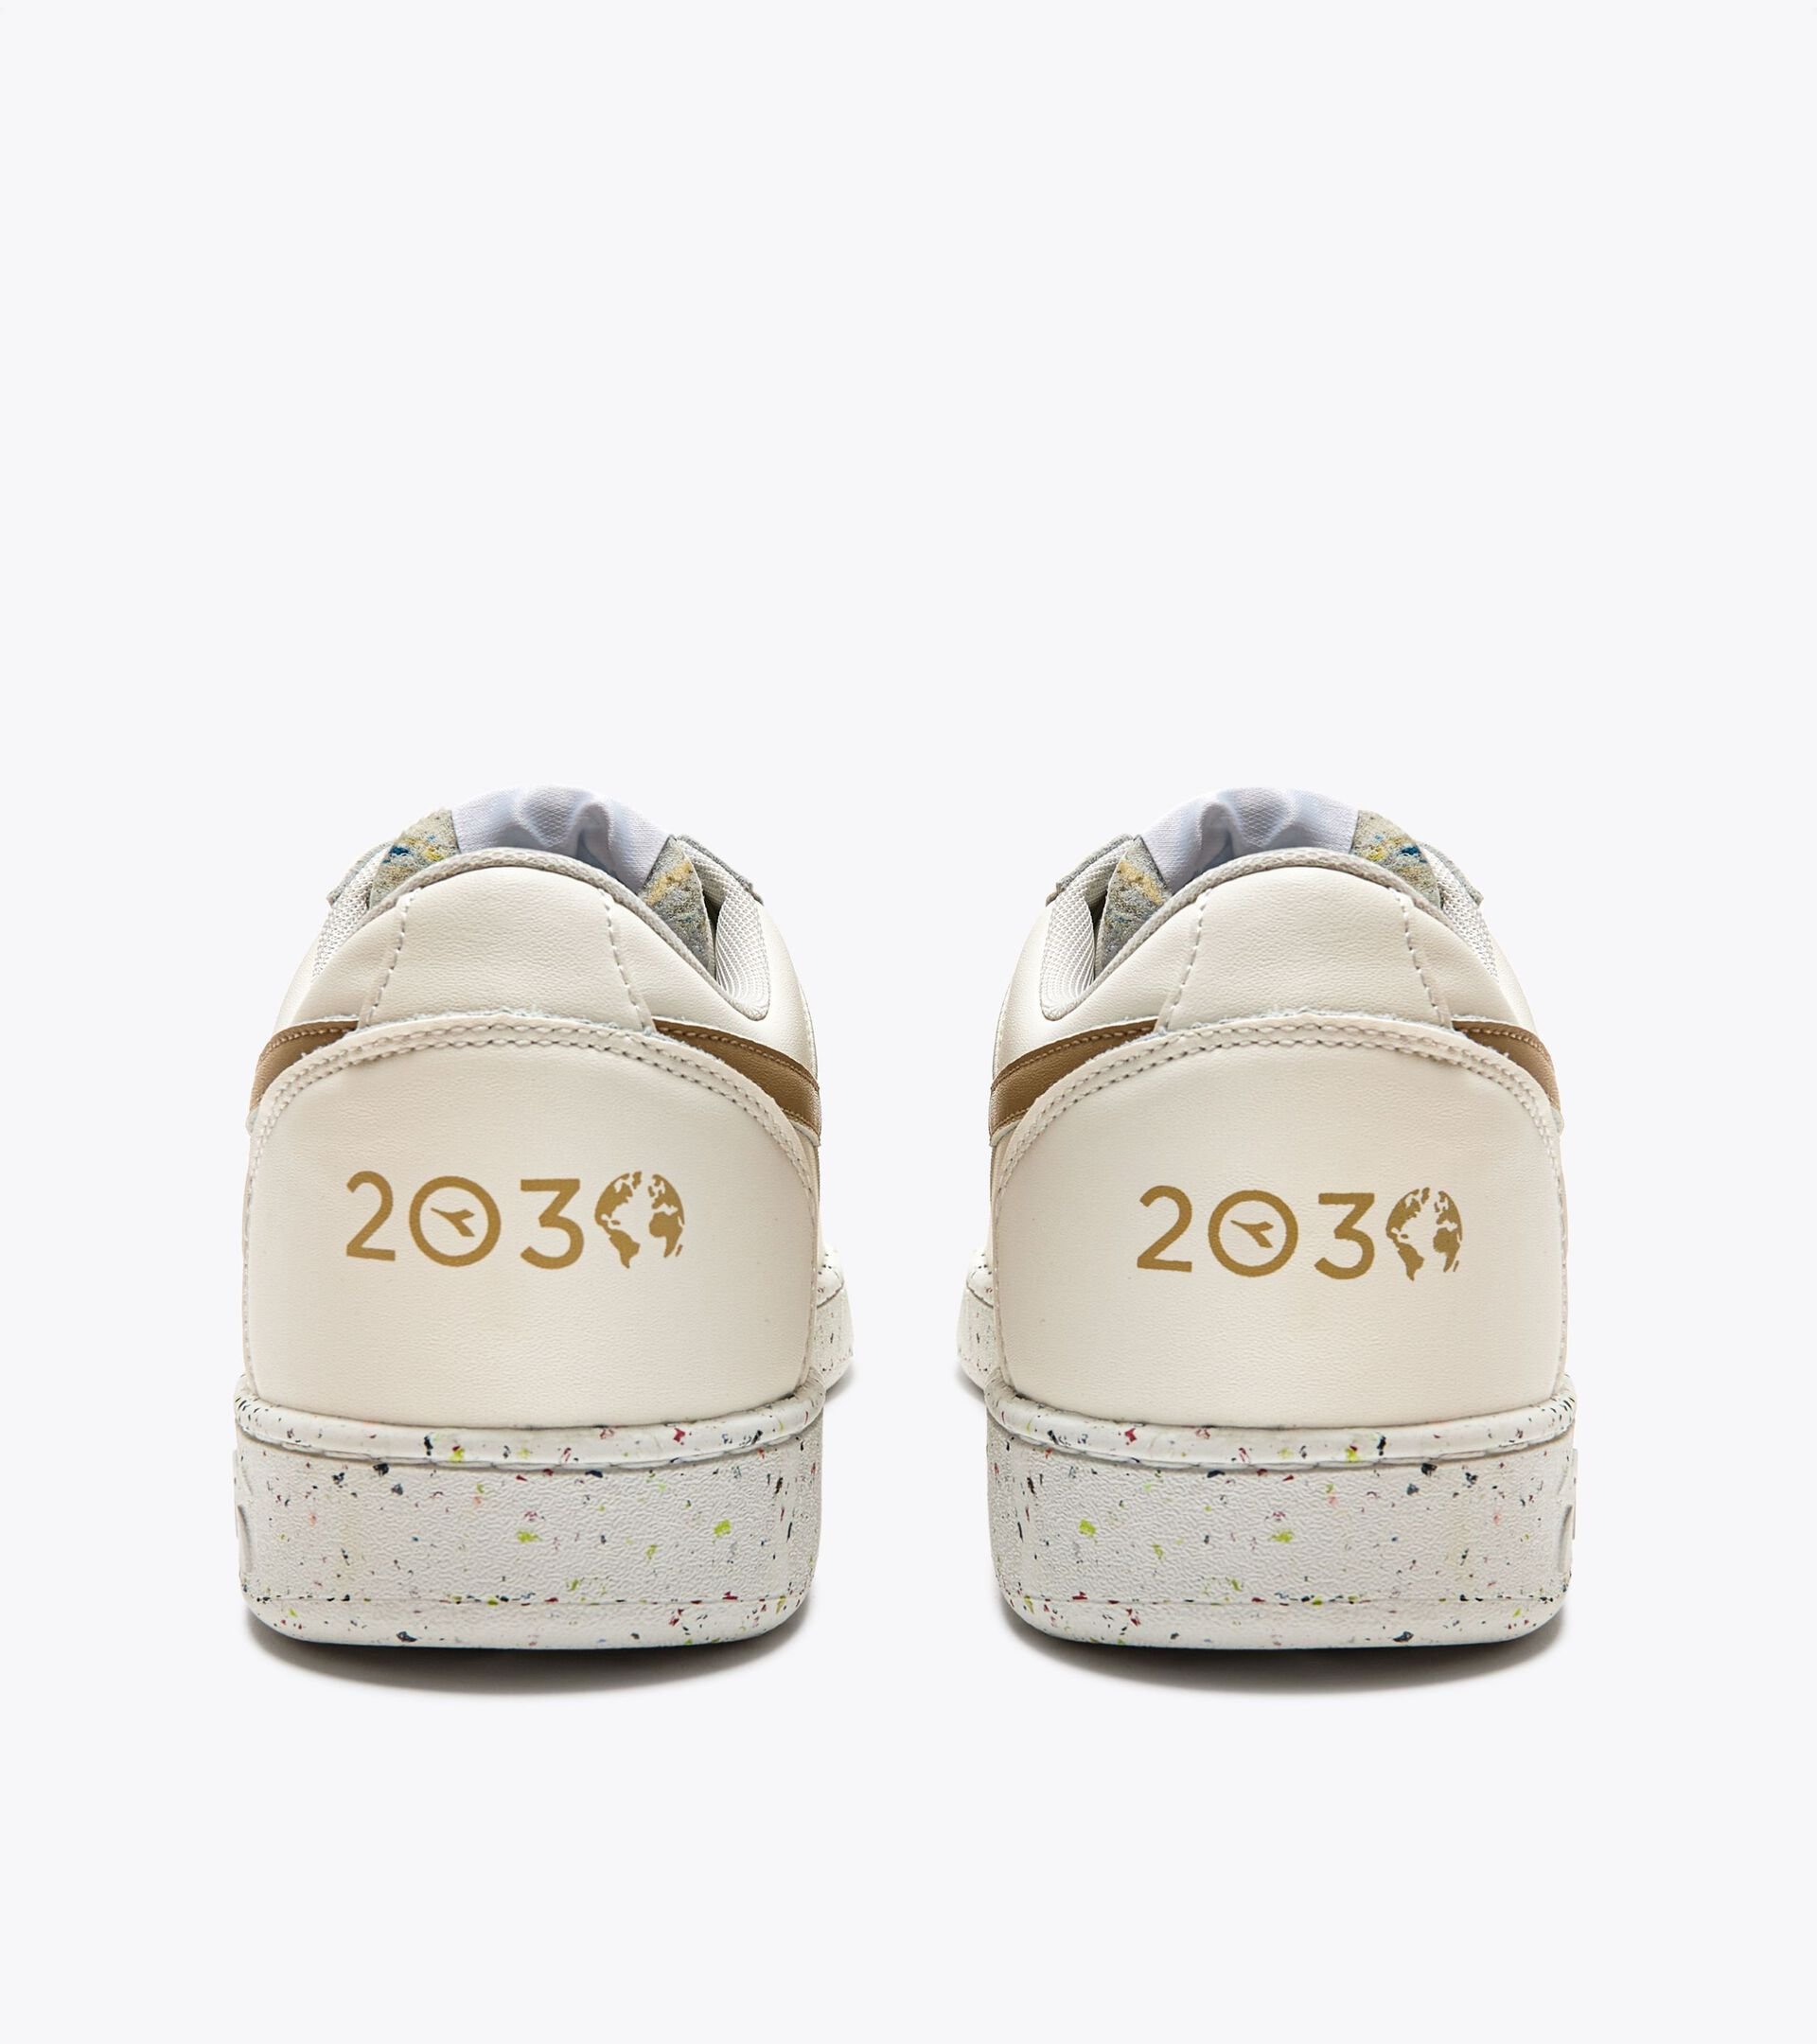 Chaussures de sportswear - Gender neutral MAGIC BASKET LOW 2030 BLANC/CAFE GLACE - Diadora